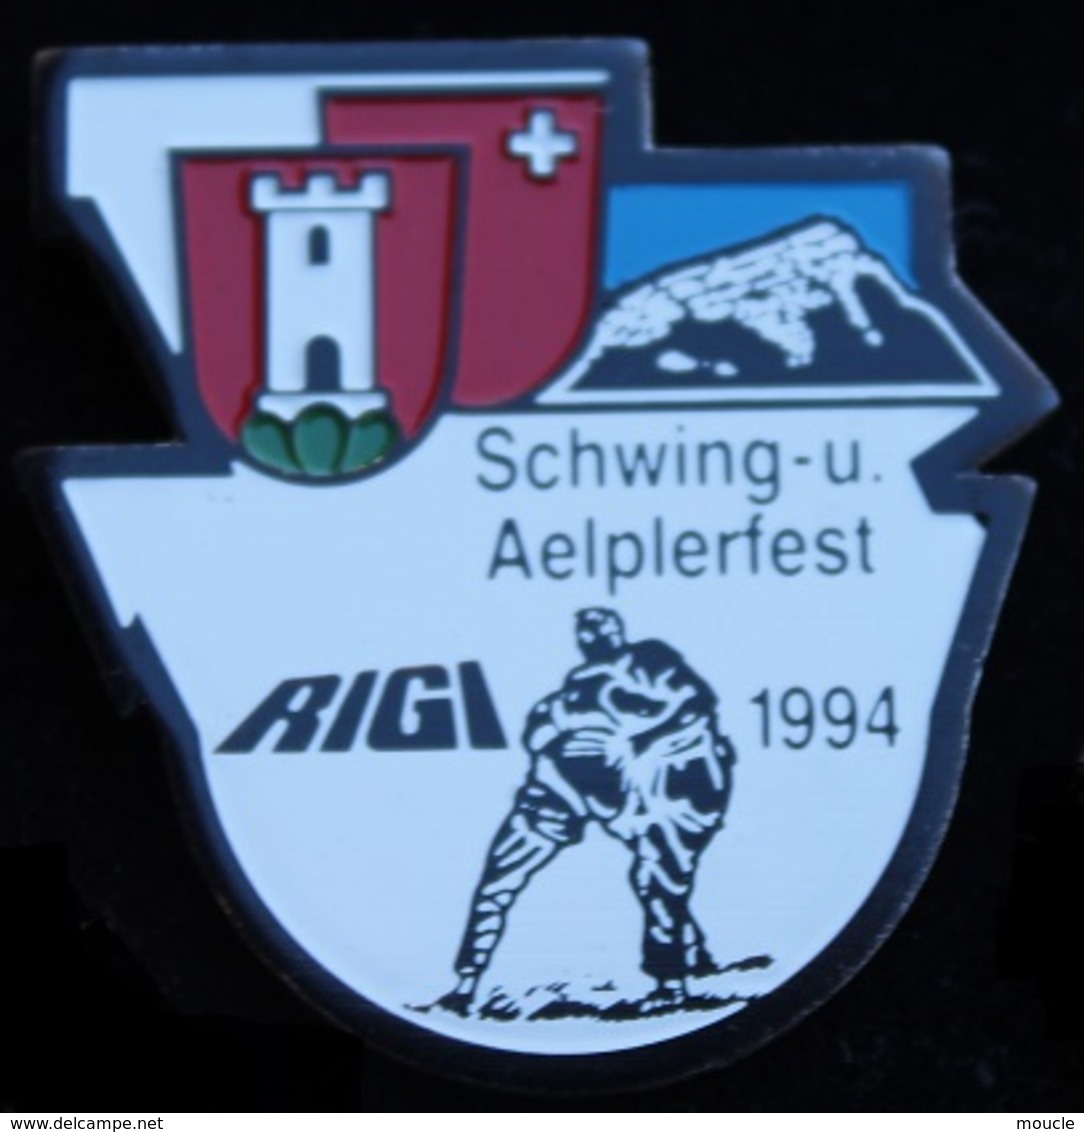 LUTTE SUISSE - LUTTEURS - SCHWING-U. - AELPERFEST - RIGI - 1994 - URI - SCHWEIZ - SWISS - SWITZERLAND -    (21) - Wrestling